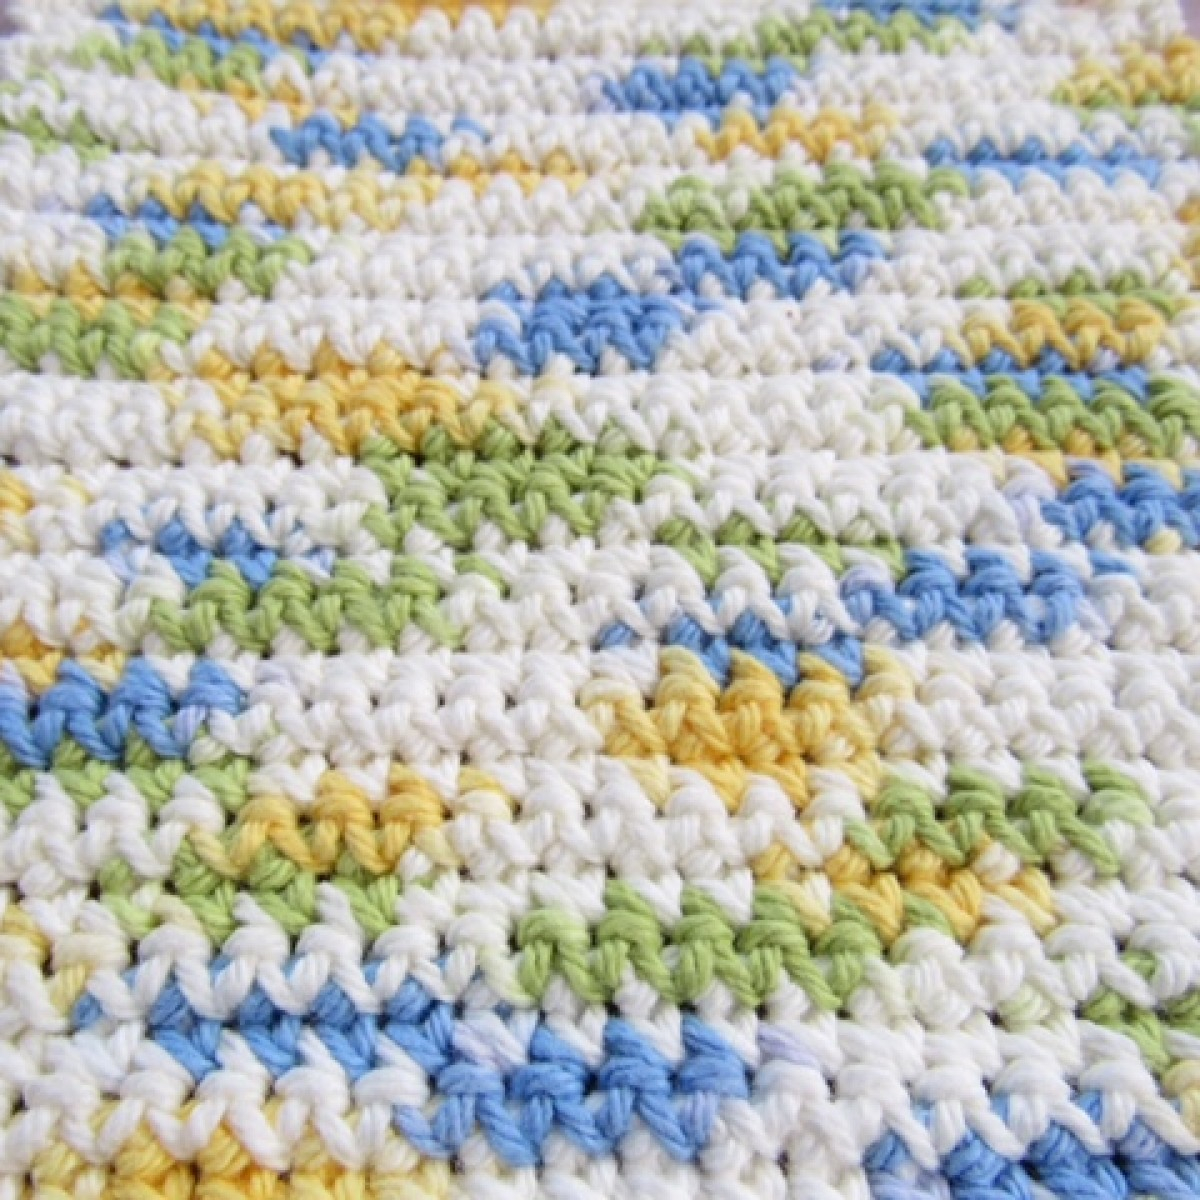 Dishcloth Crochet Patterns Easiest Crochet Project Ever Stitch A Dishcloth